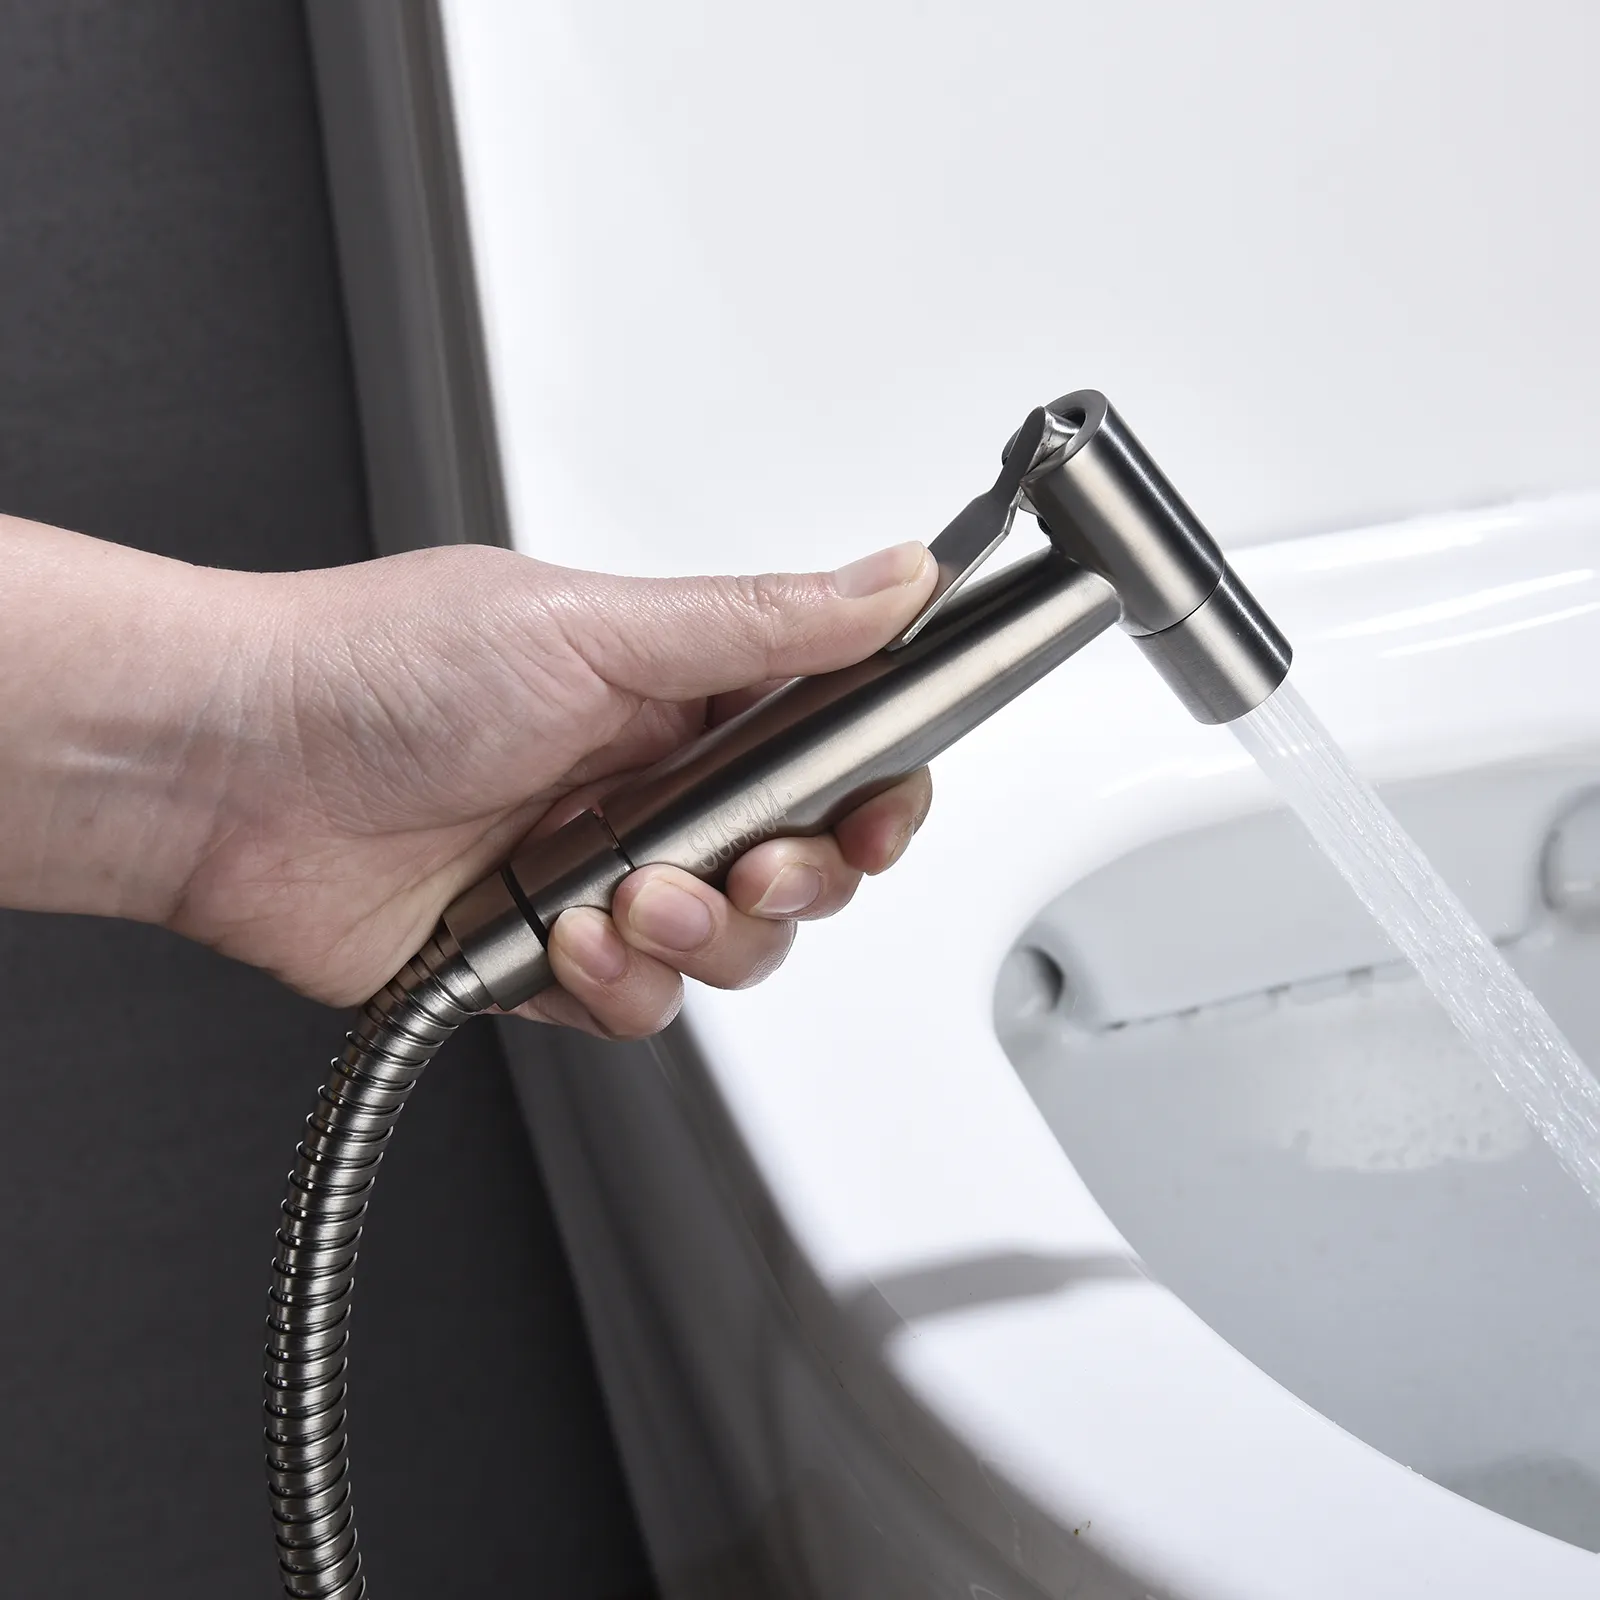 Feminine Hygiene Handheld Toilet Shower Hot Cold Handheld Bidet Sprayer With Hose